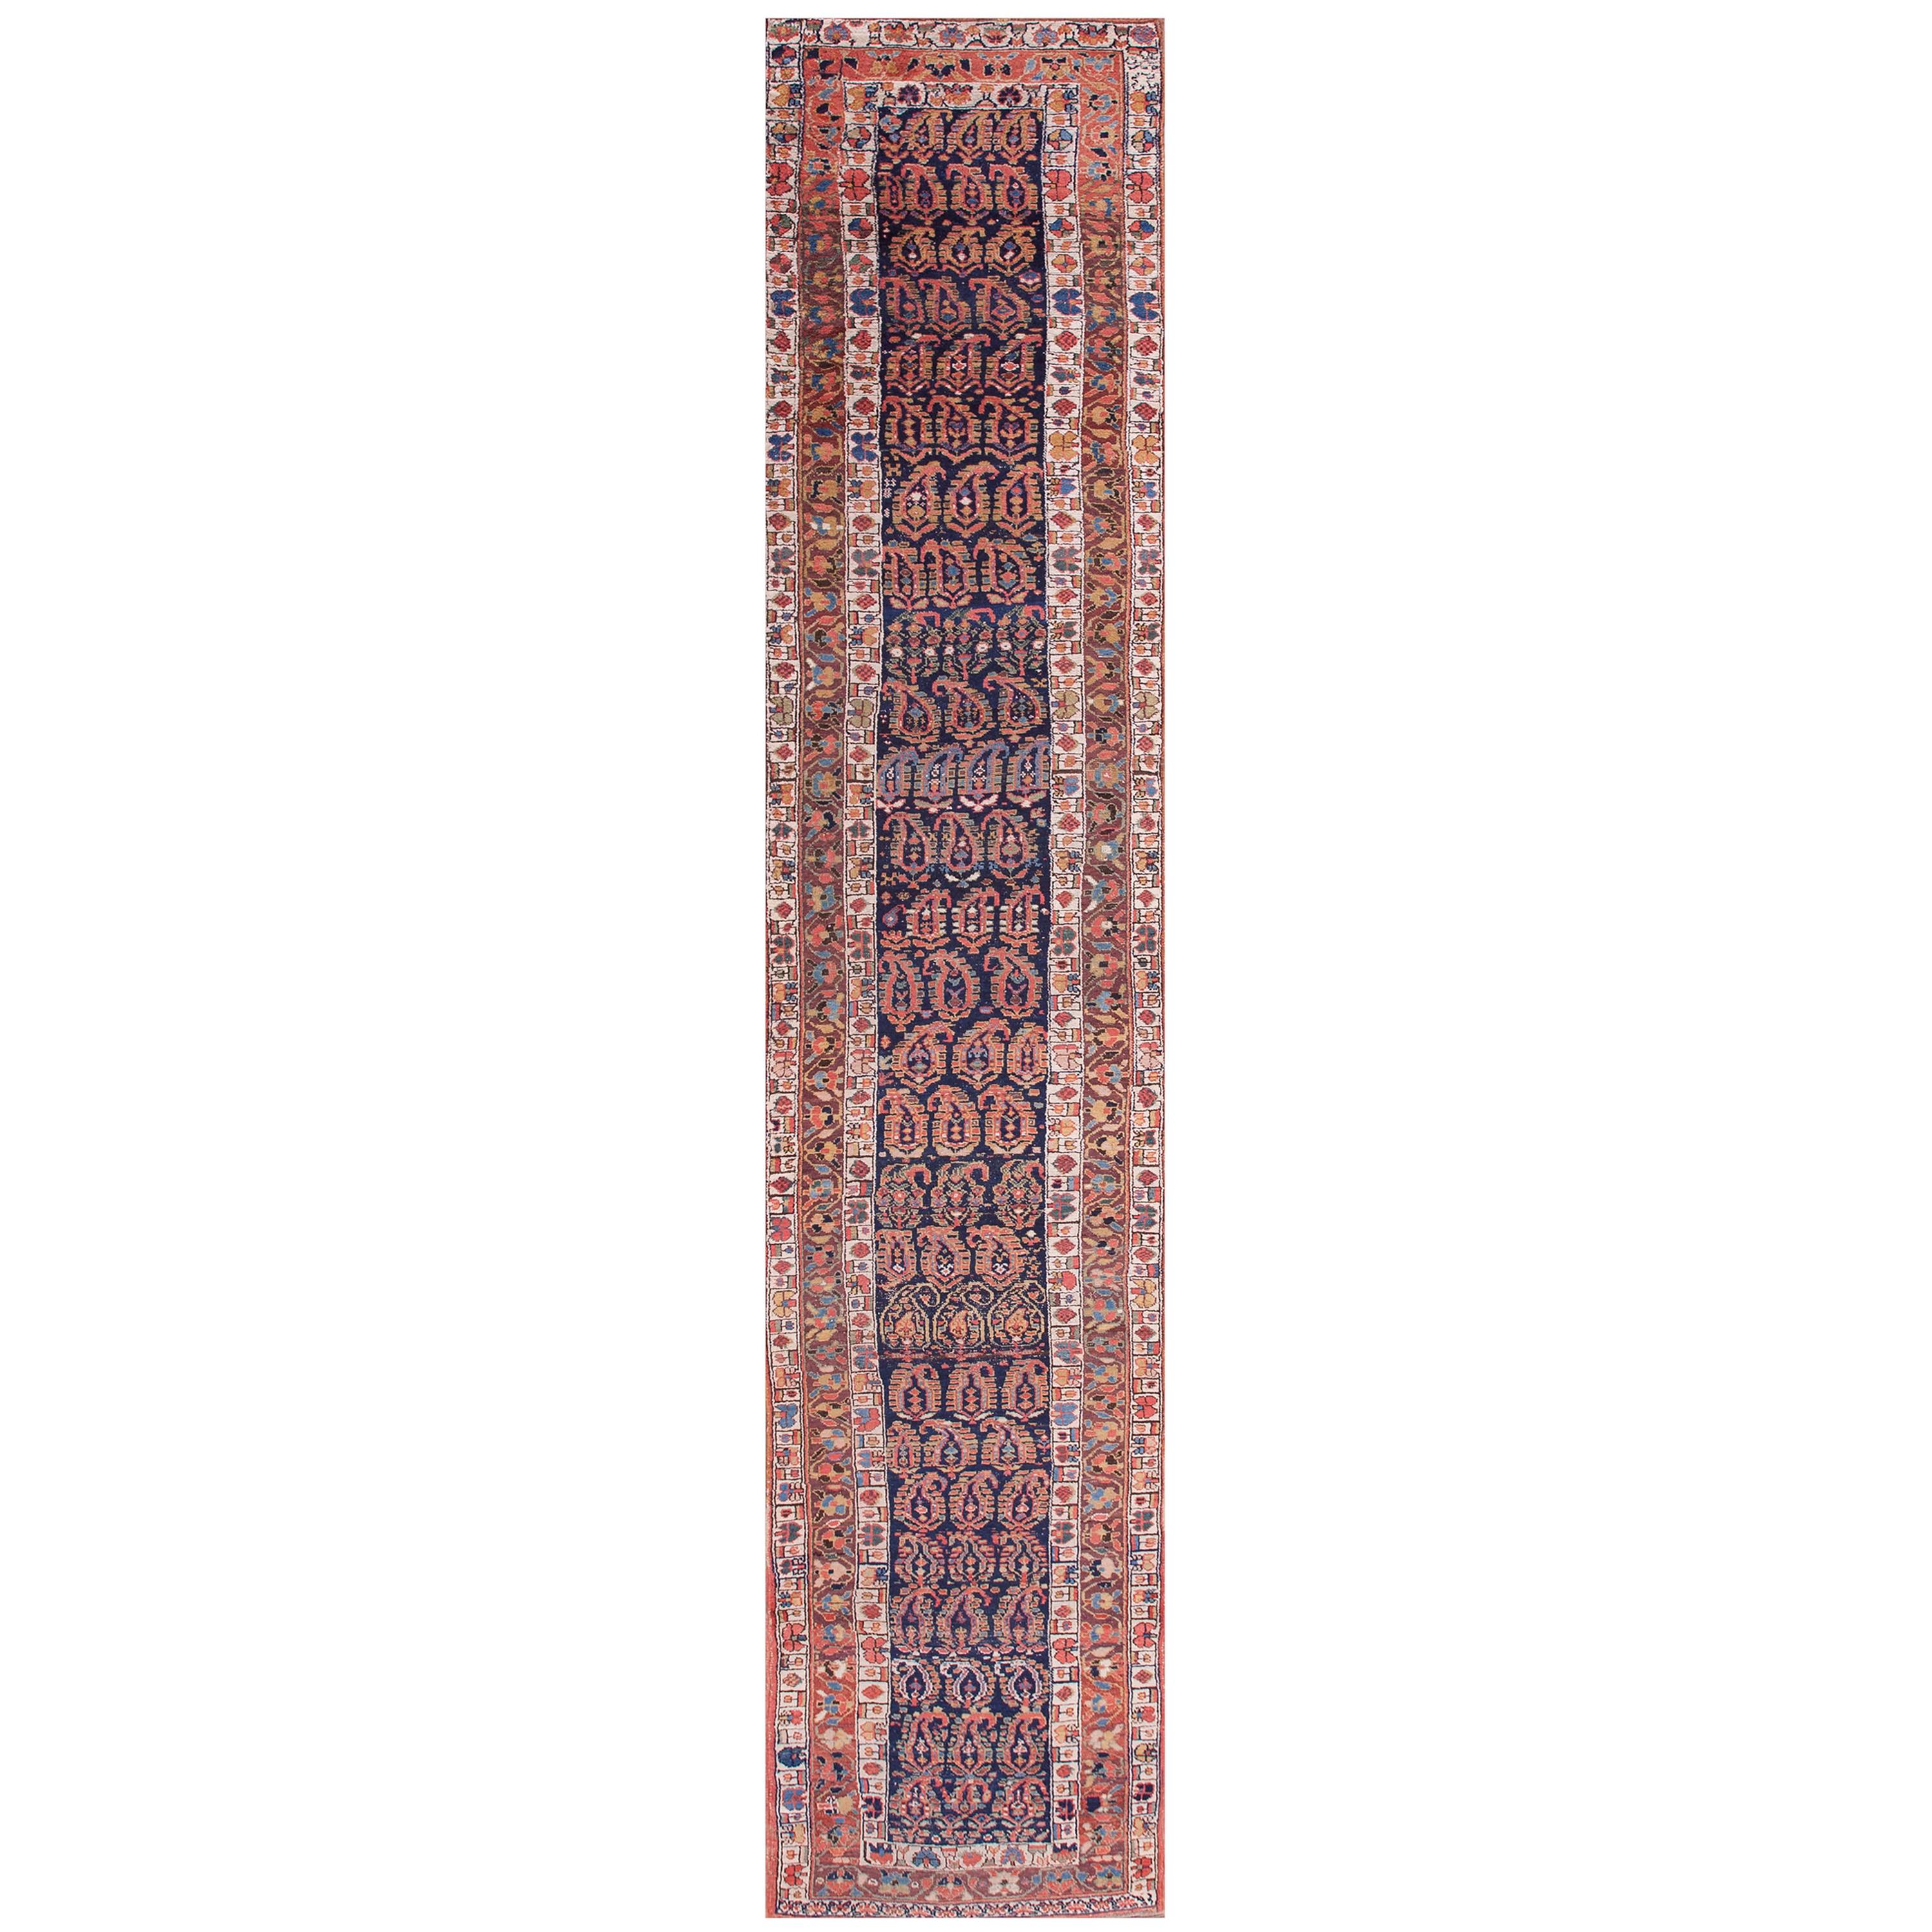 Late 19th Century Persian Kurdish Carpet ( 3'7" x 17'3" - 109 x 526 ) For Sale